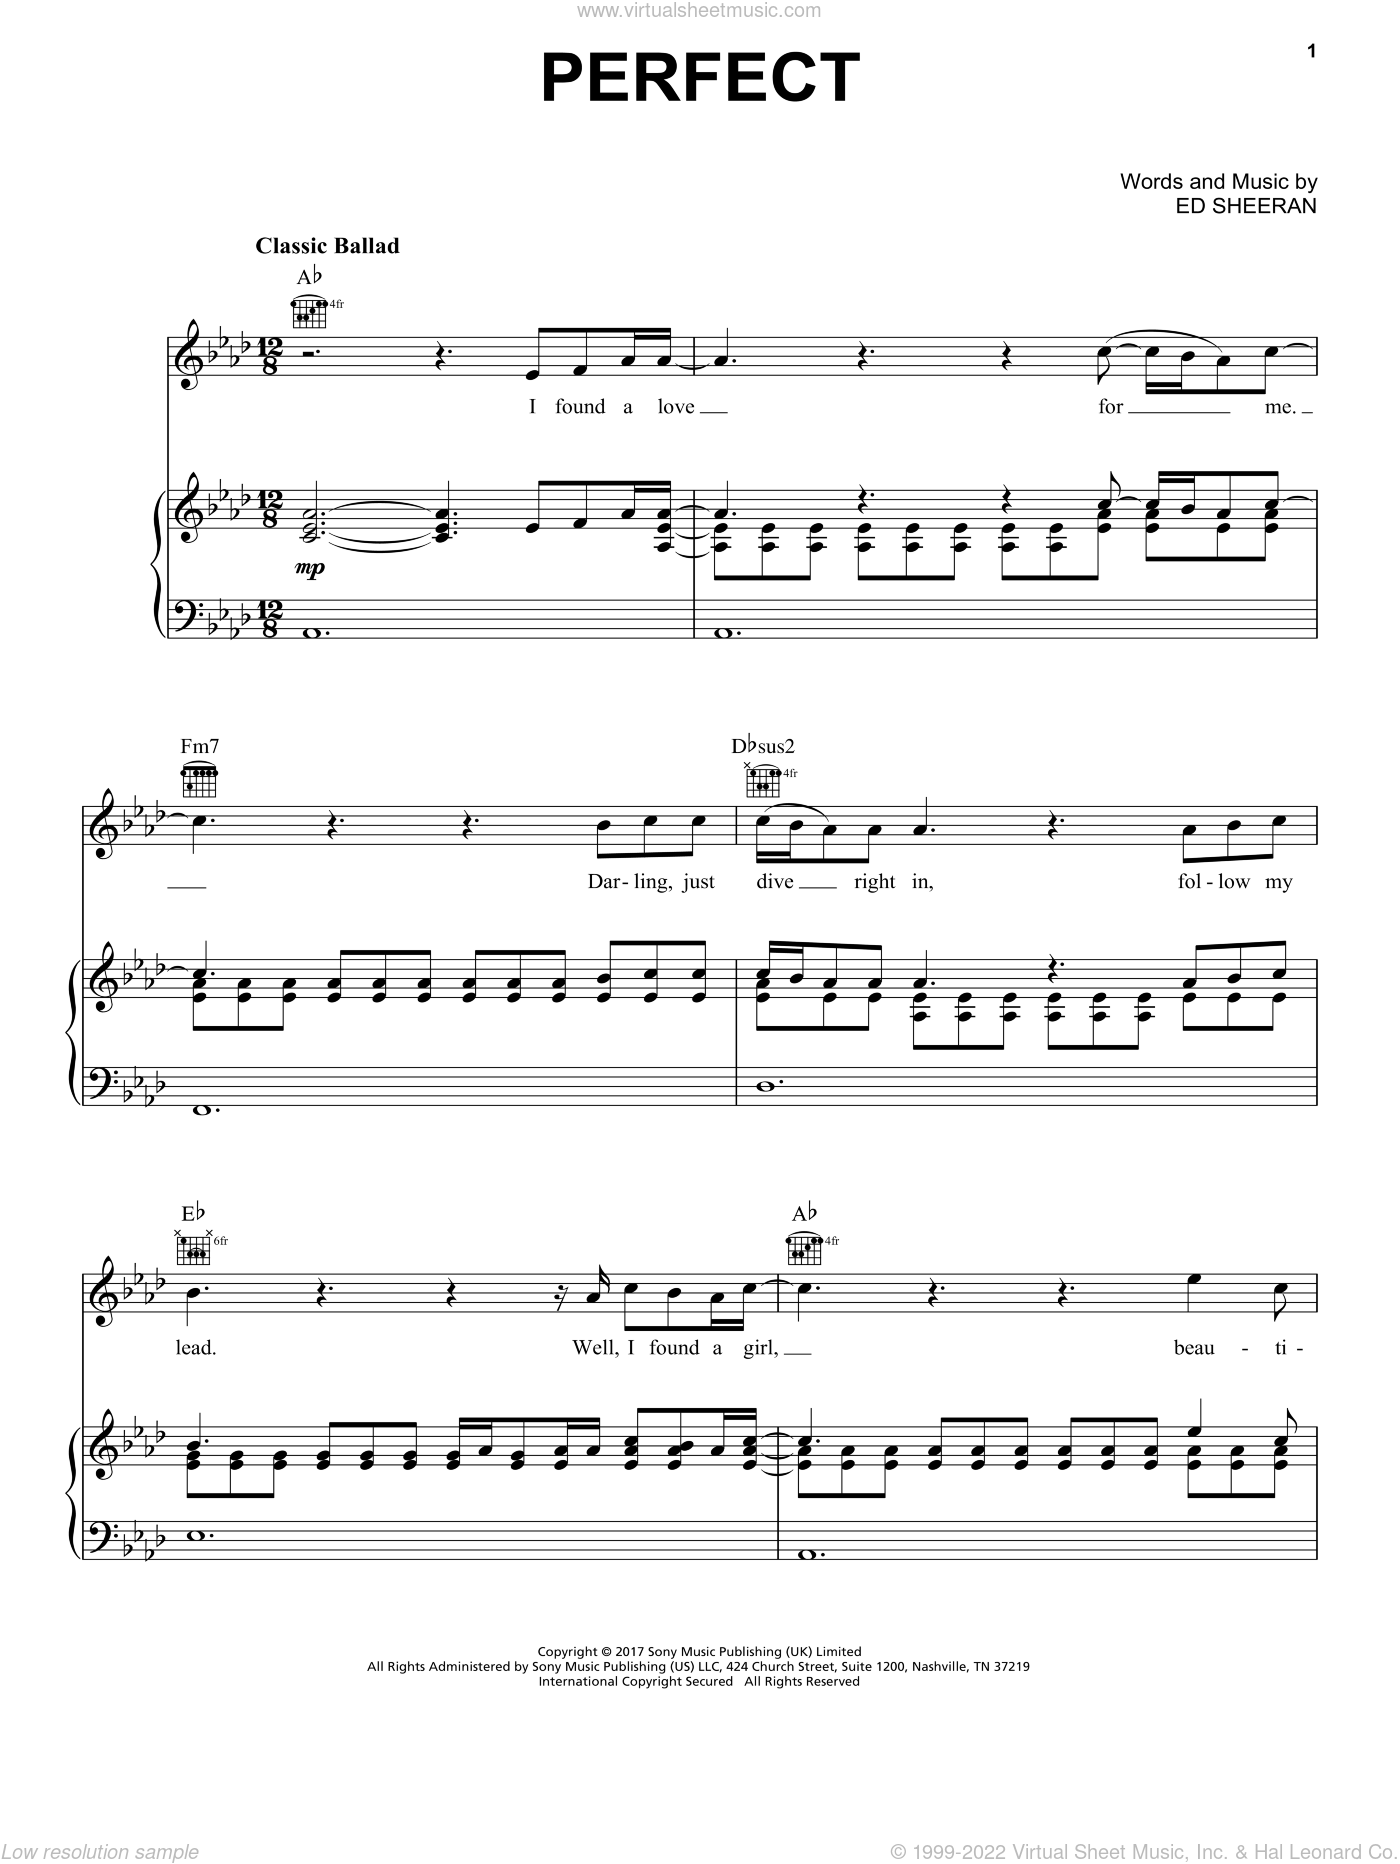 Sheeran - Perfect sheet music for voice, piano or guitar [PDF]